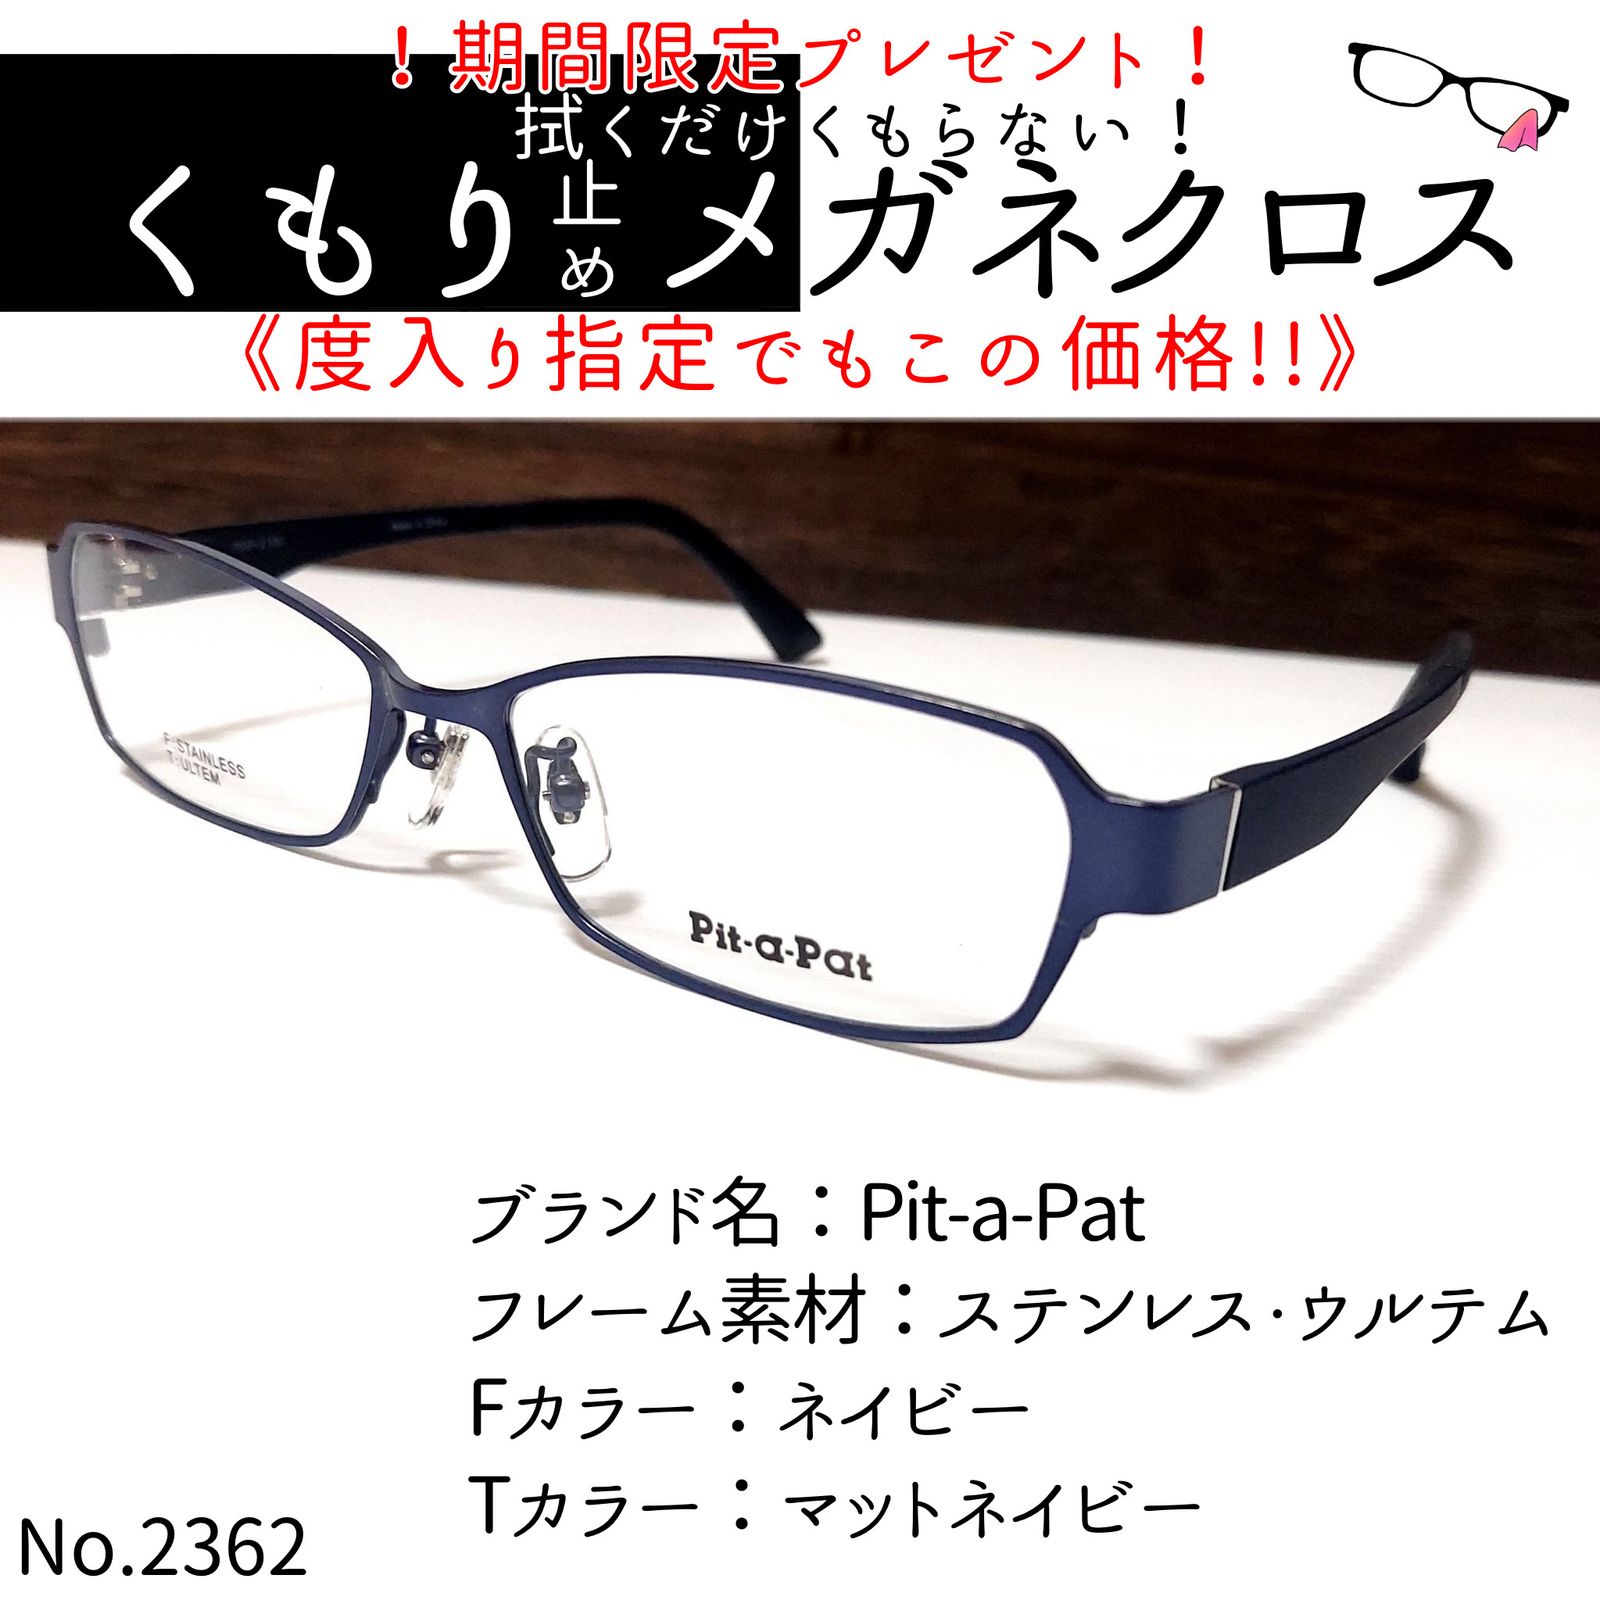 No.2362+メガネ Pit-a-Pat【度数入り込み価格】 - スッキリ生活専門店